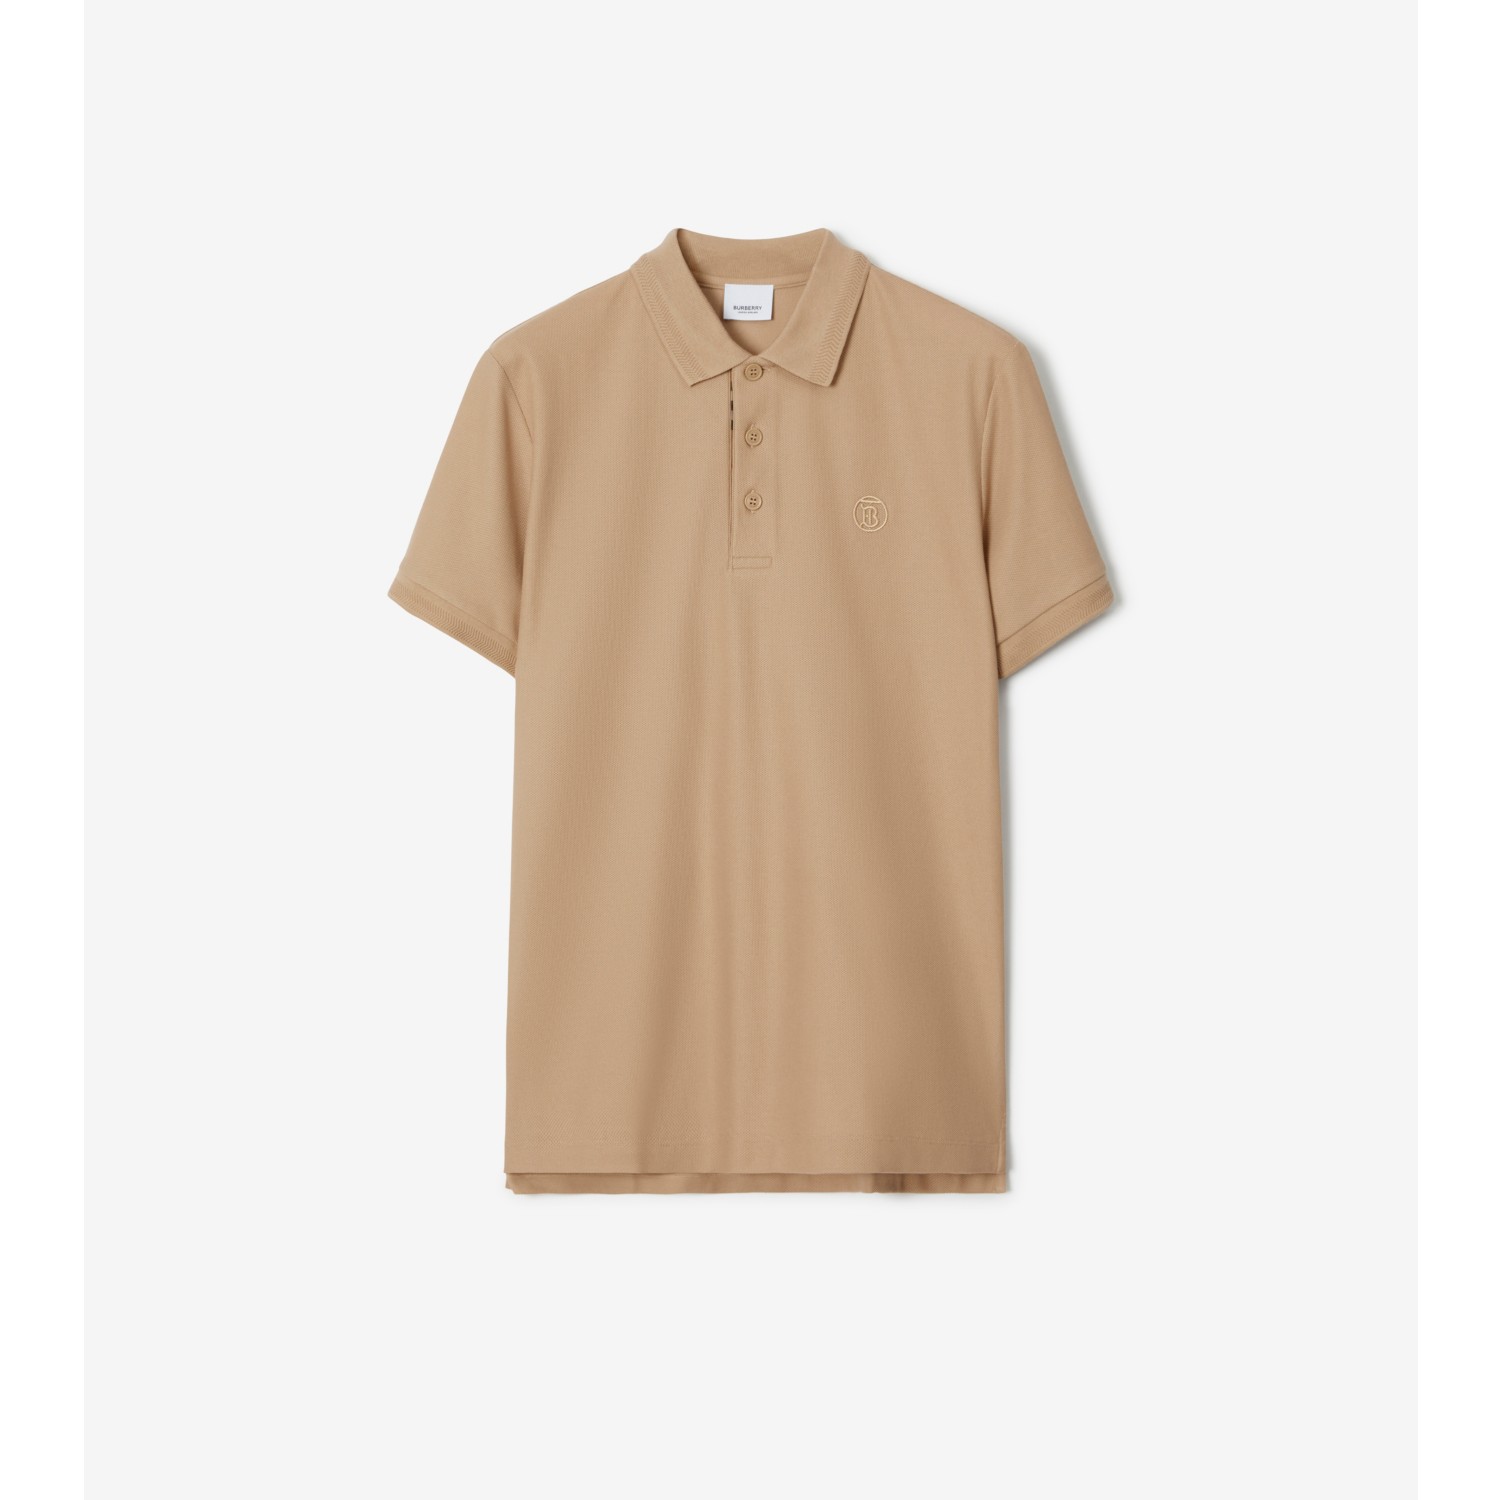 Monogram Motif Polo Shirt in Soft Fawn - Men